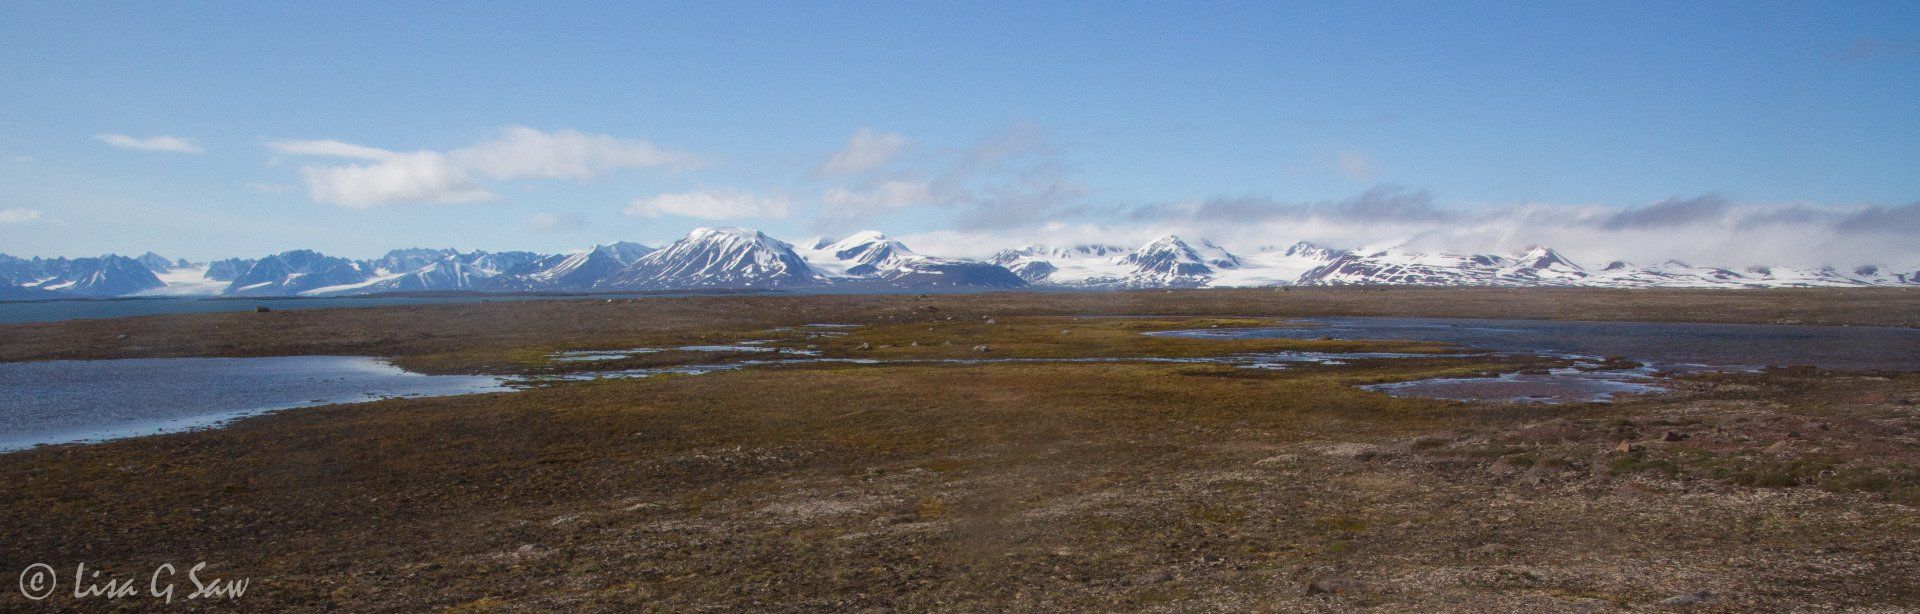 Northwest Spitsbergen National Park mountains beyond flat tundra